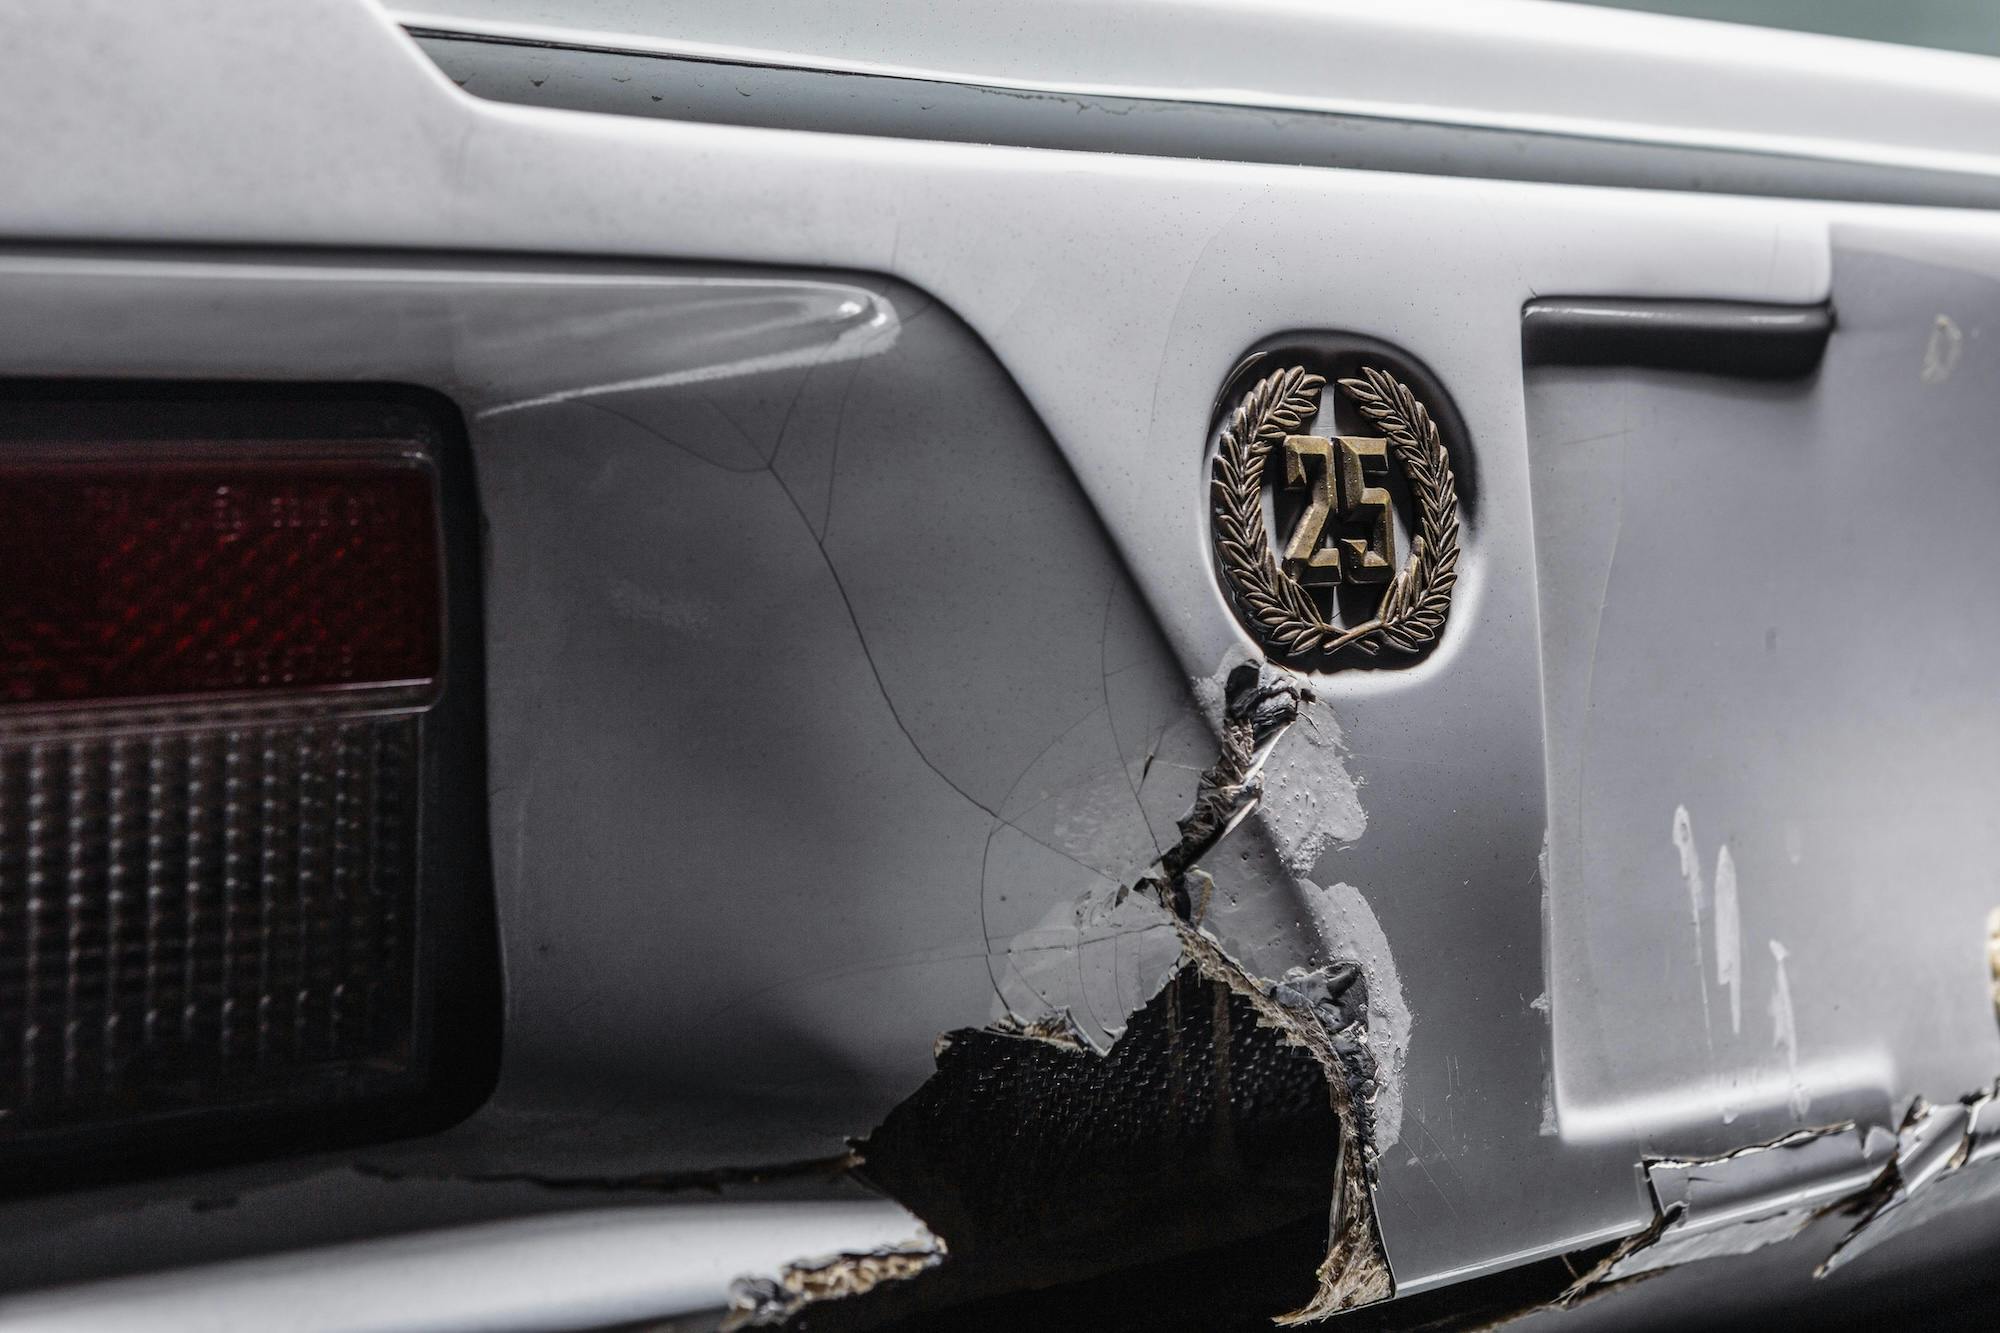 Wolf of Wall Street Film 1989 Lamborghini Countach rear damage